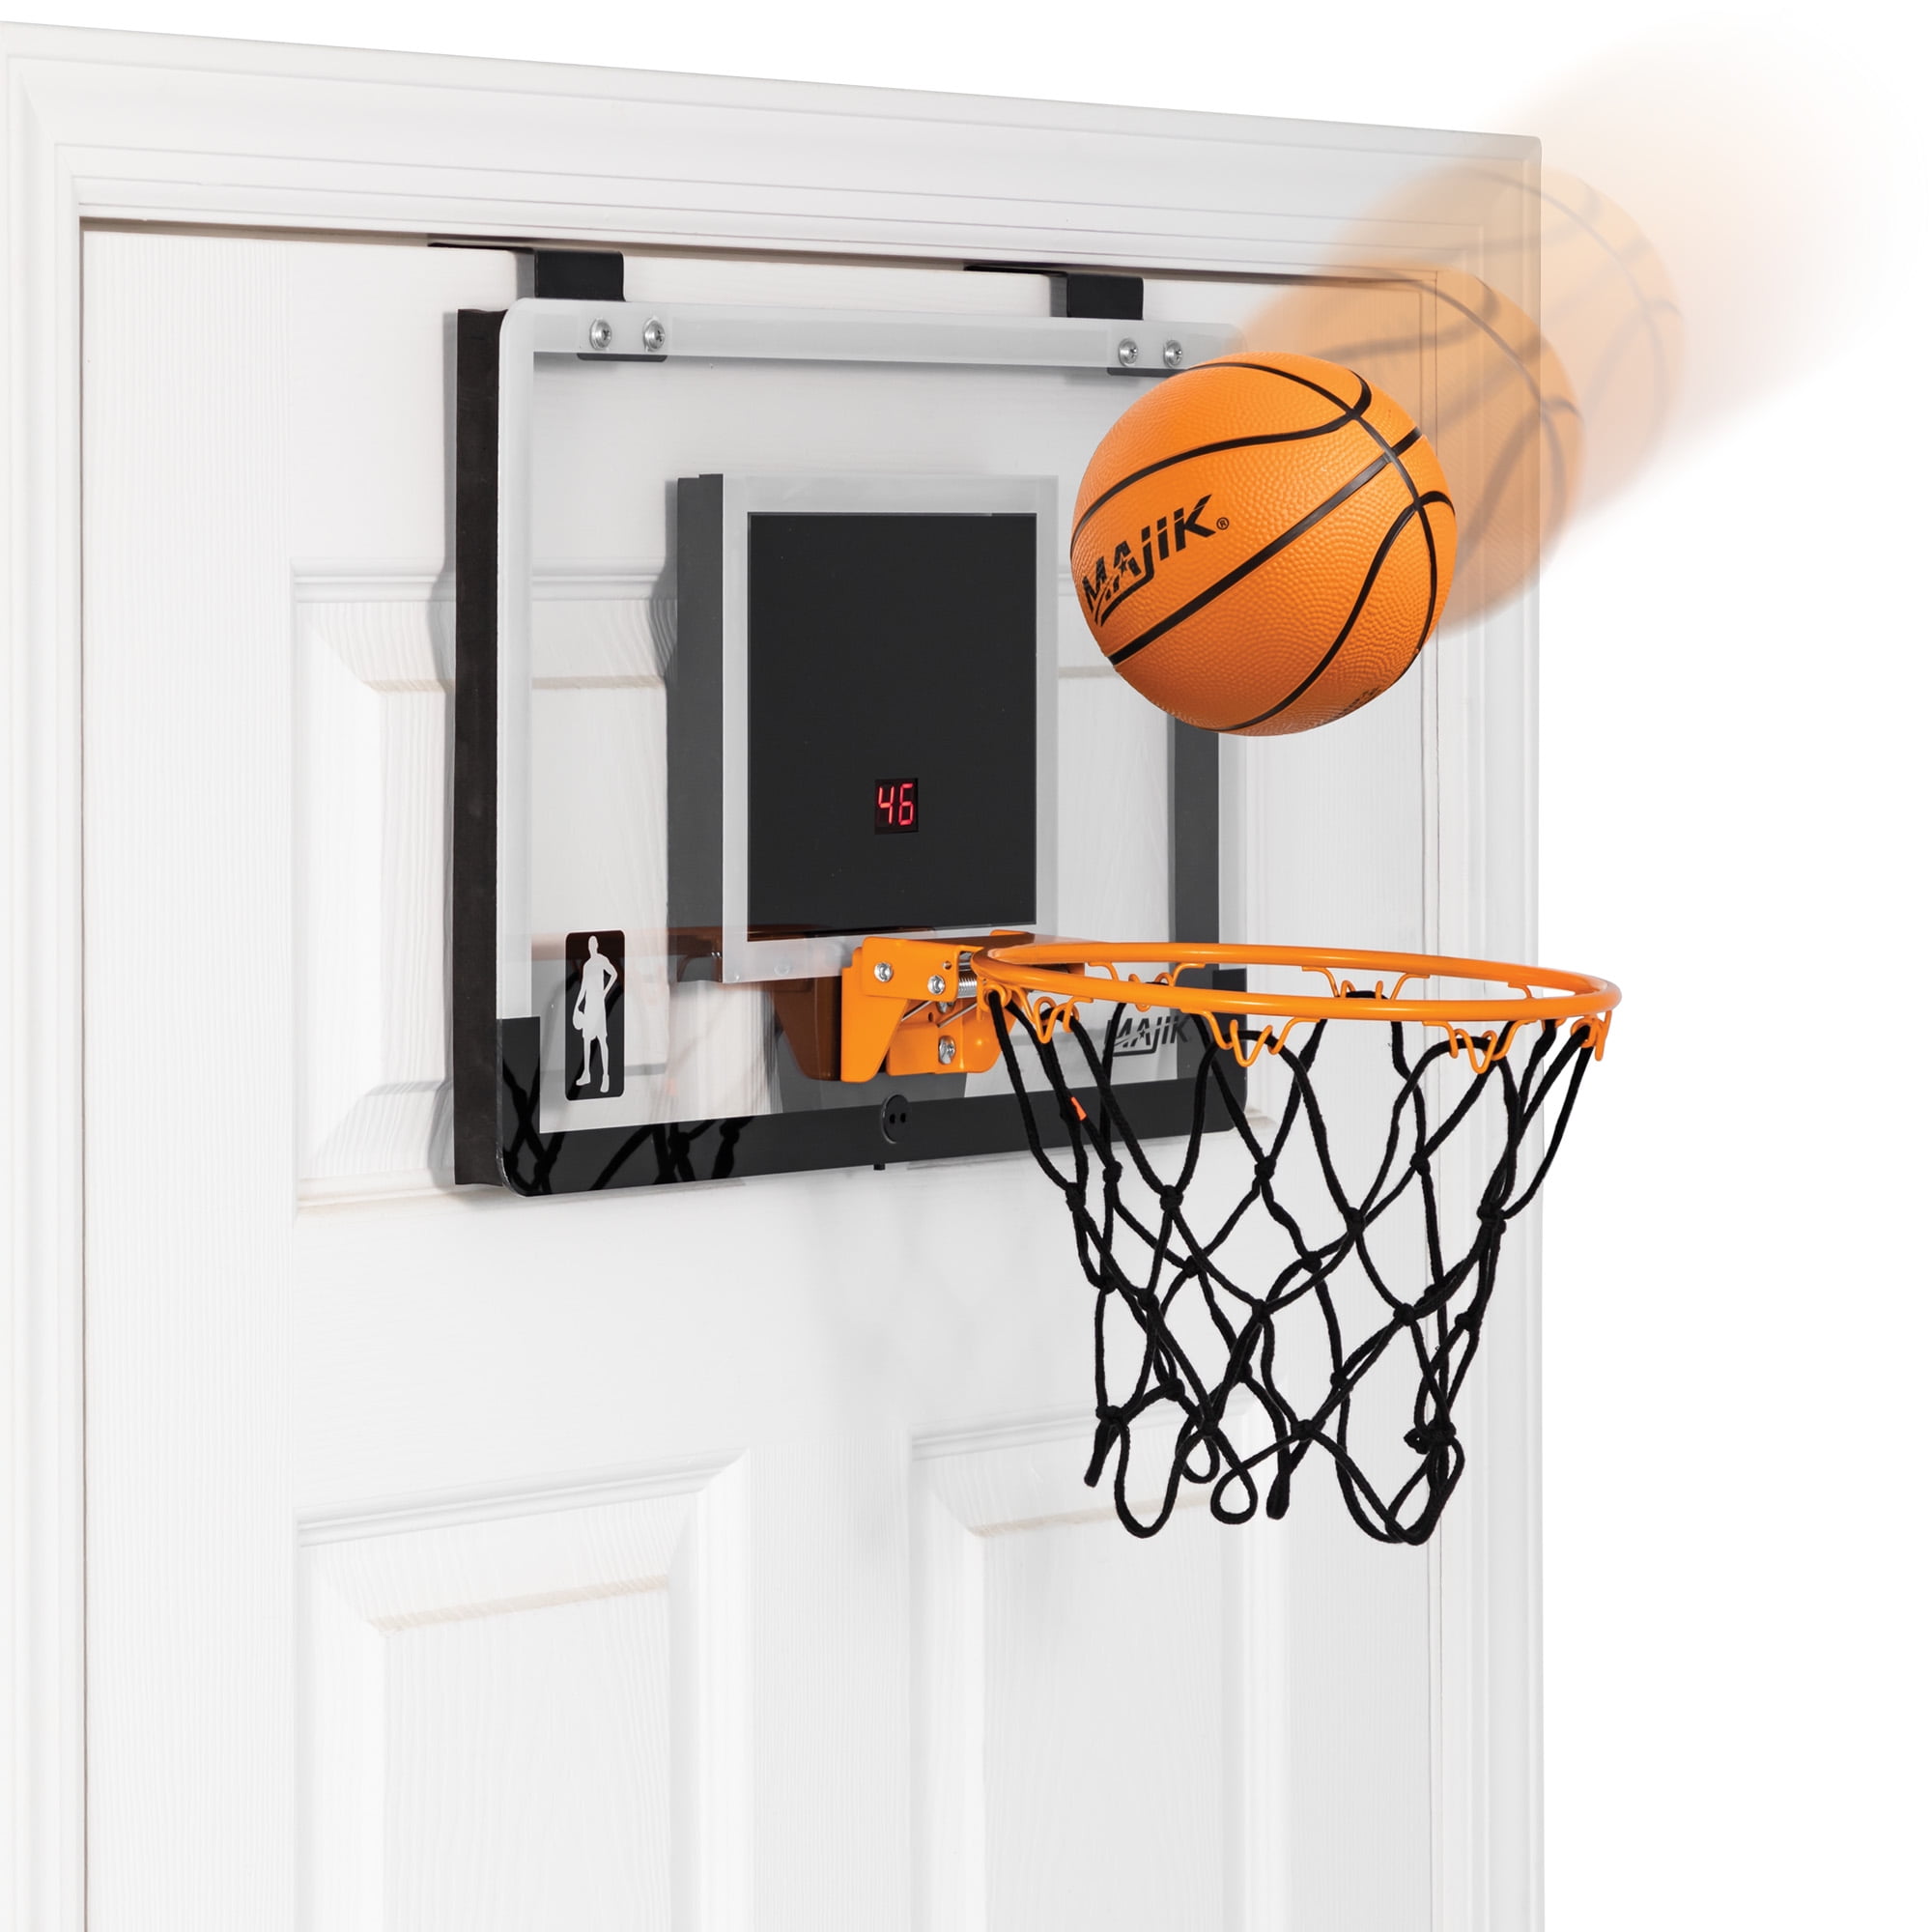 Details about   MD Sports 7" 3pcs Rubber Pop A Shot Arcade Basketballs Replacement 